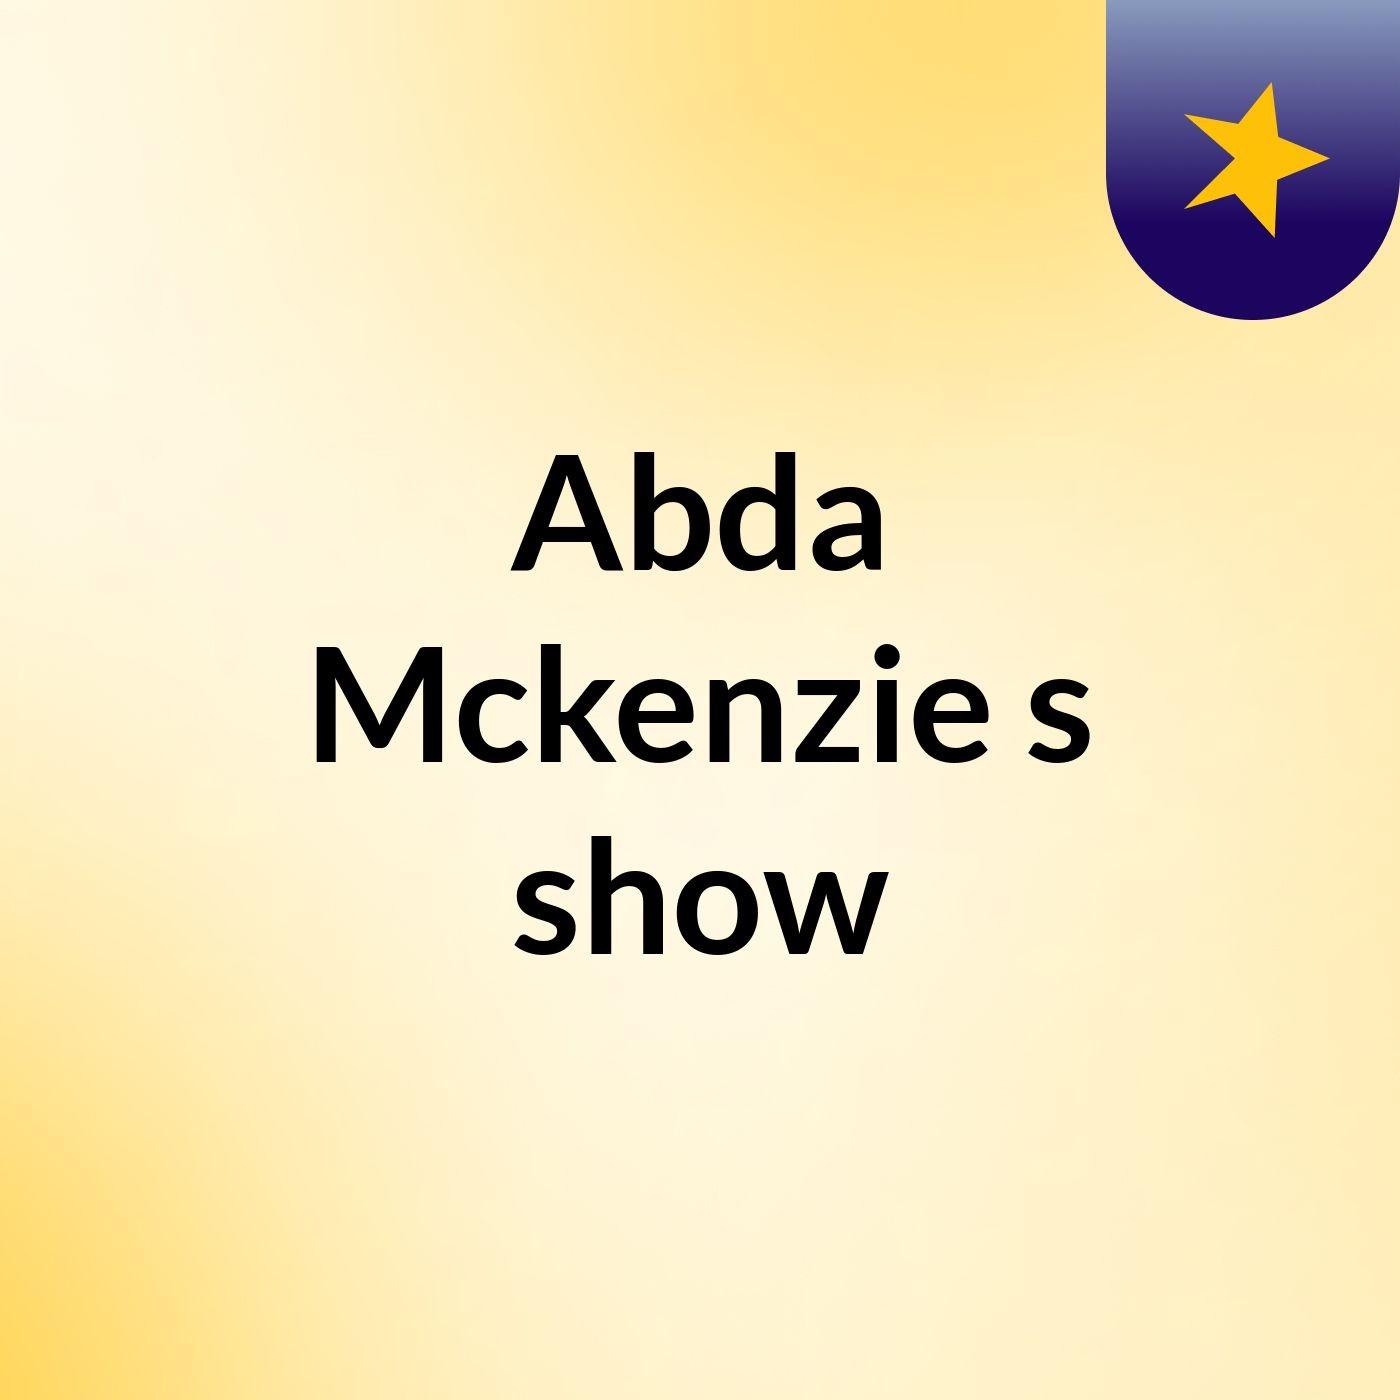 Episodio 8 - Abda Mckenzie's show